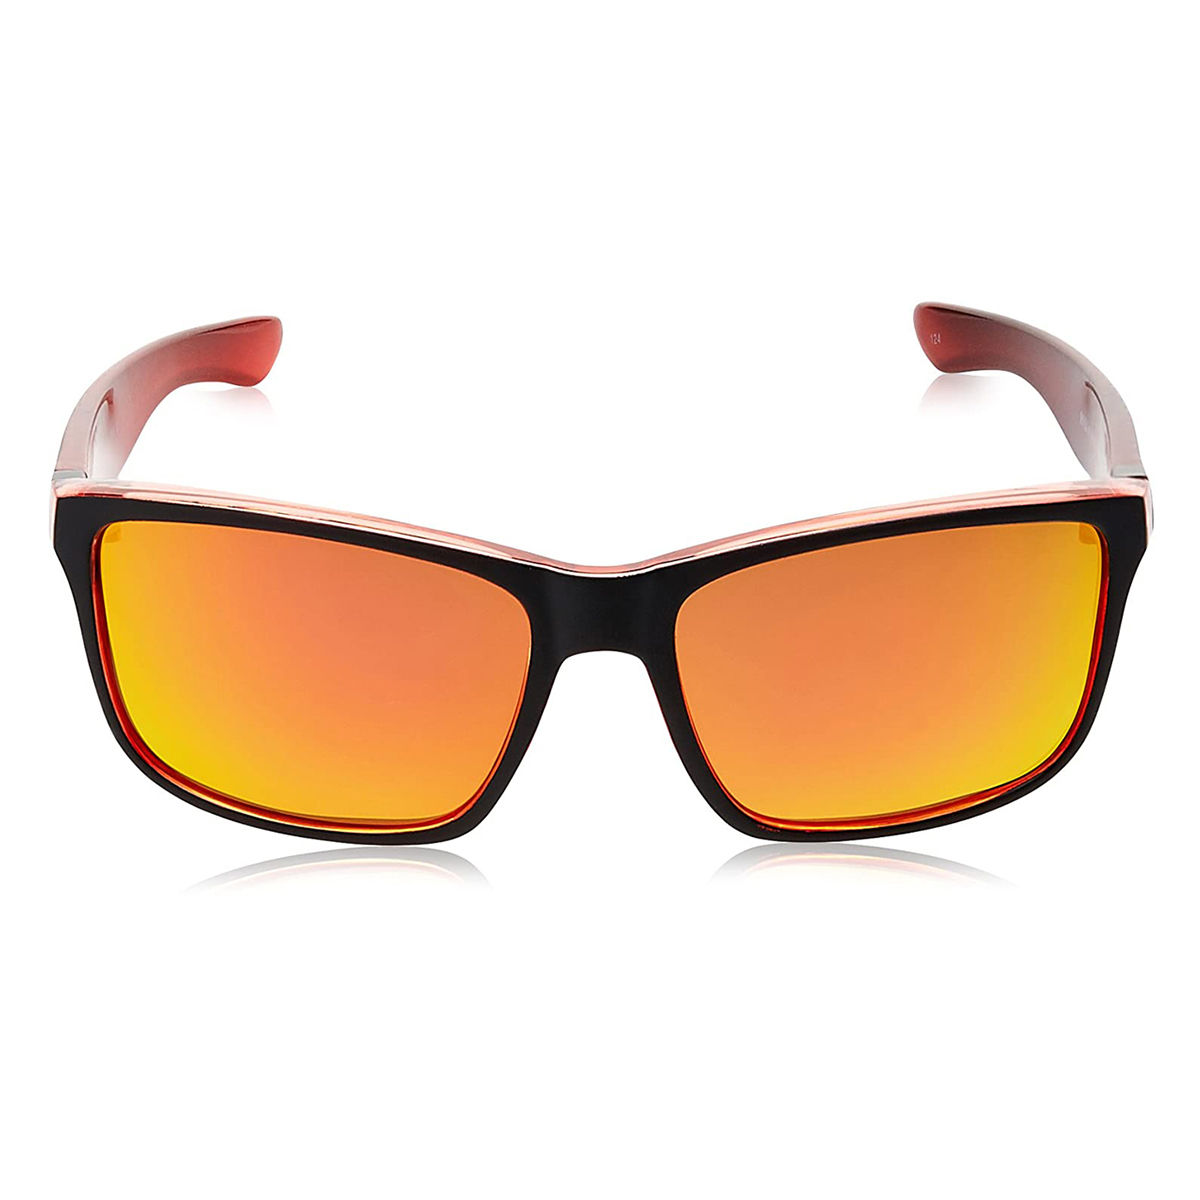 Invu Sunglasses Rectangular Sunglass With Red Lens For Men